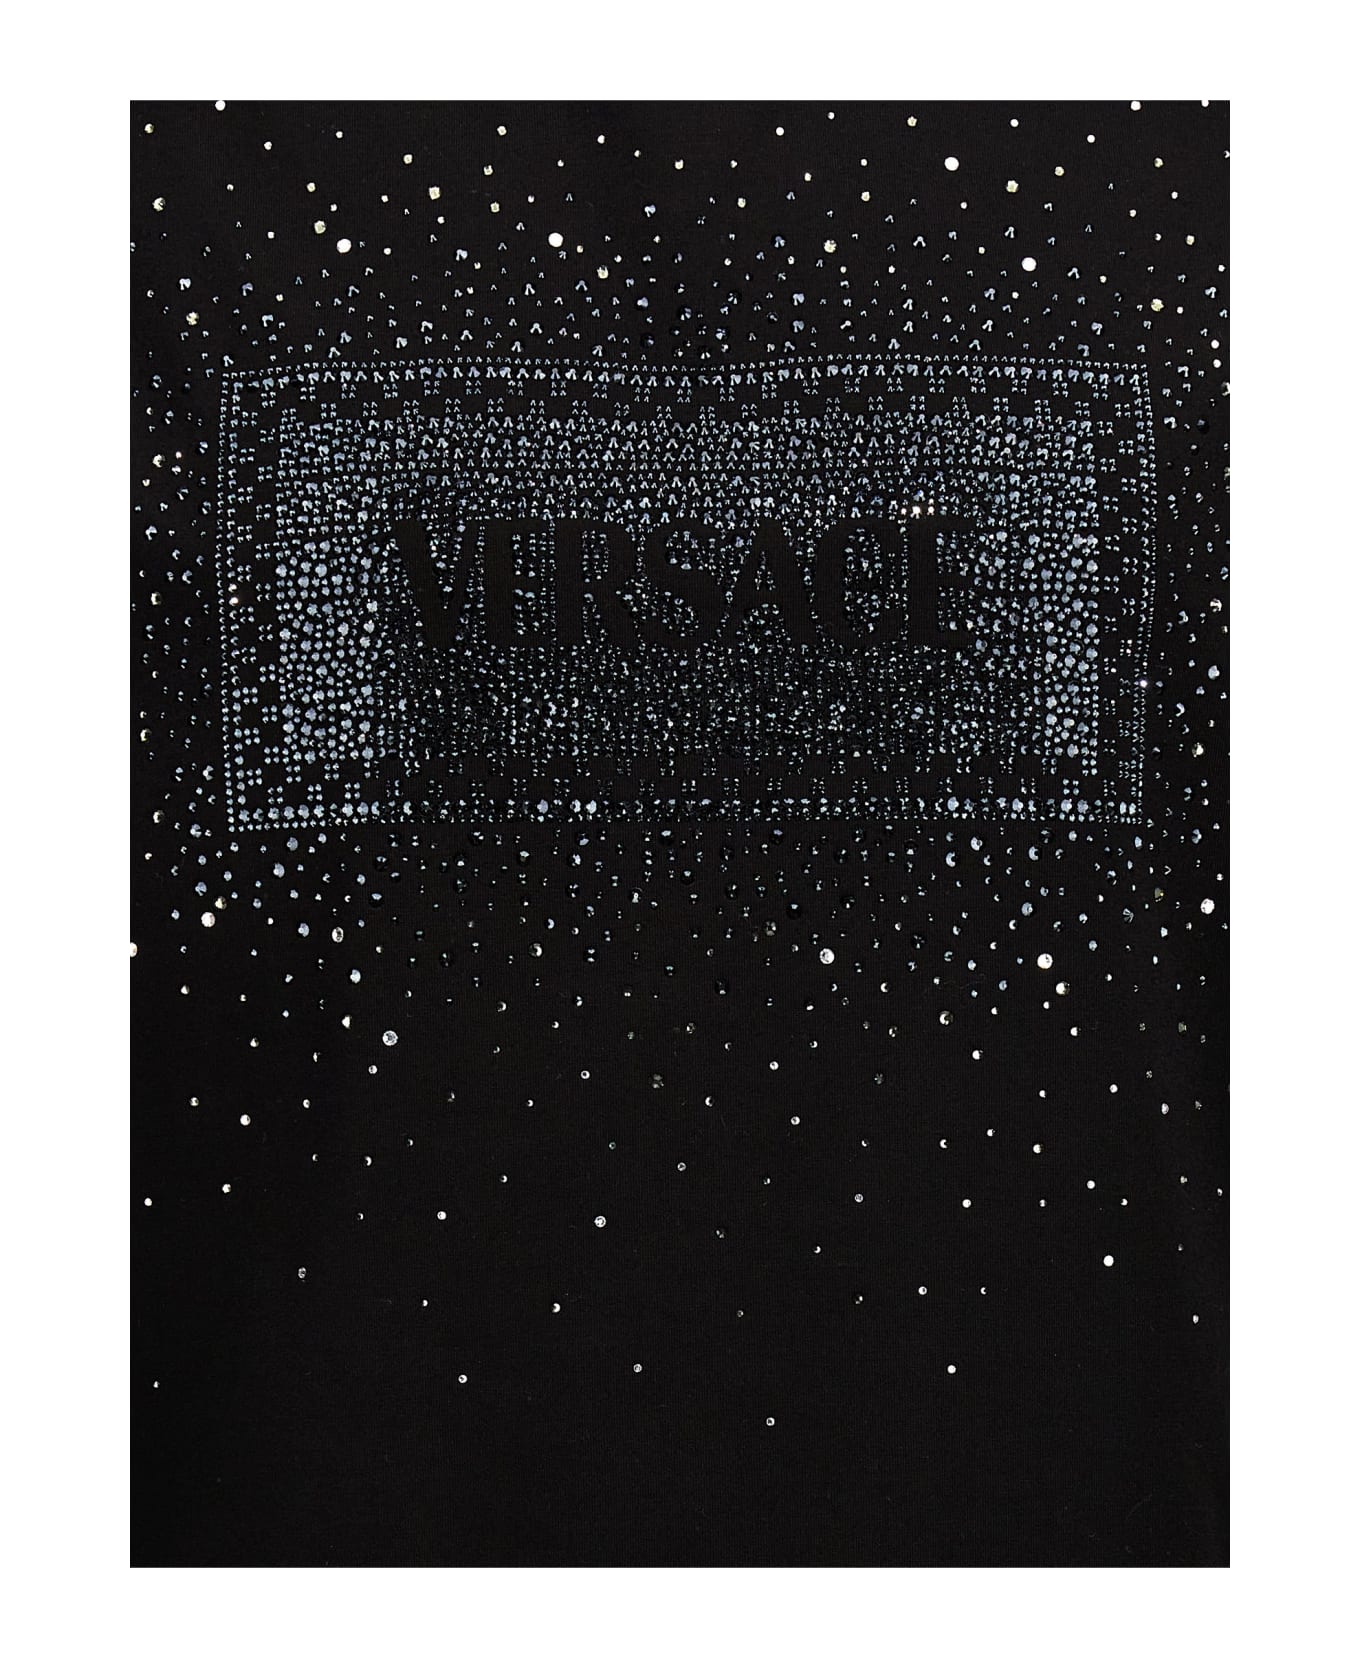 Versace Rhinestone Logo T-shirt - Black